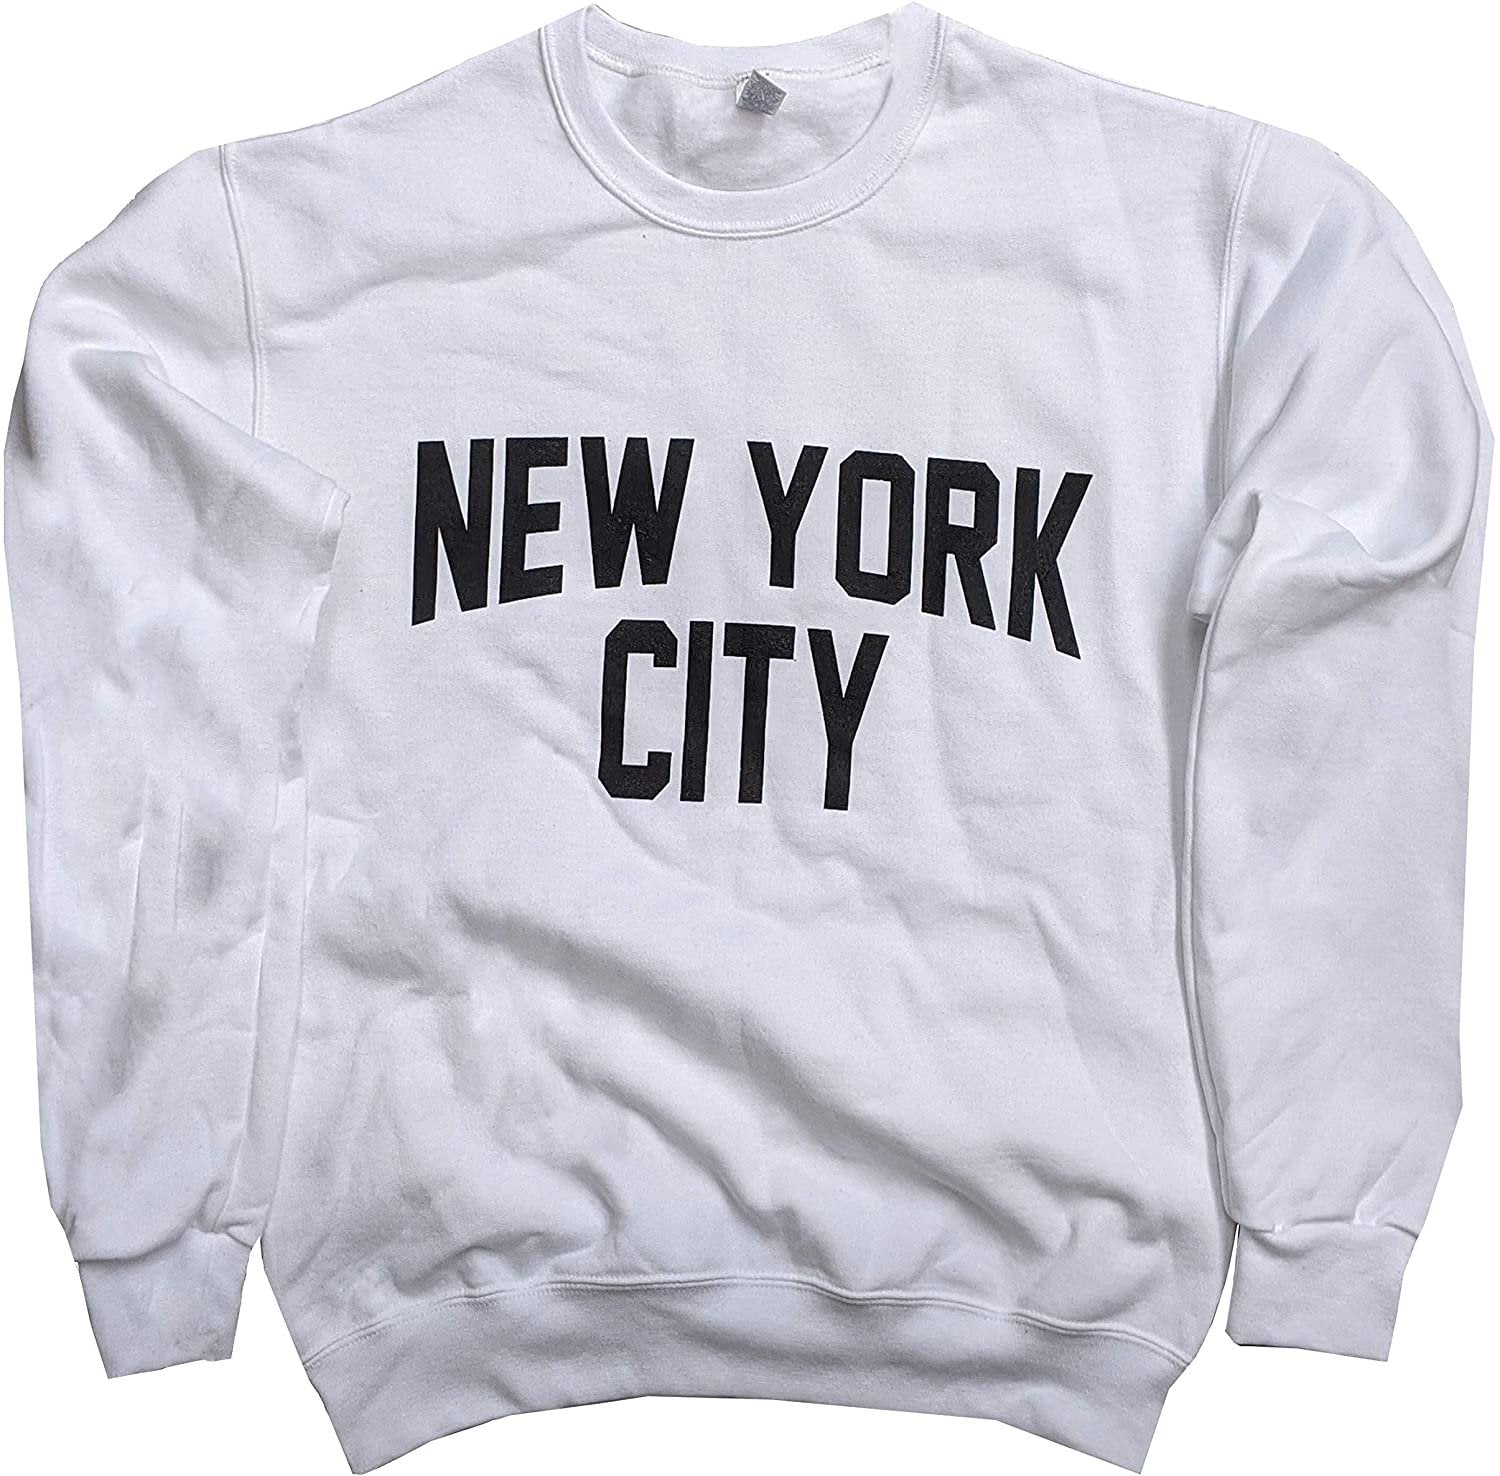 New York City Sweatshirt Screenprinted White Crewneck Shirt